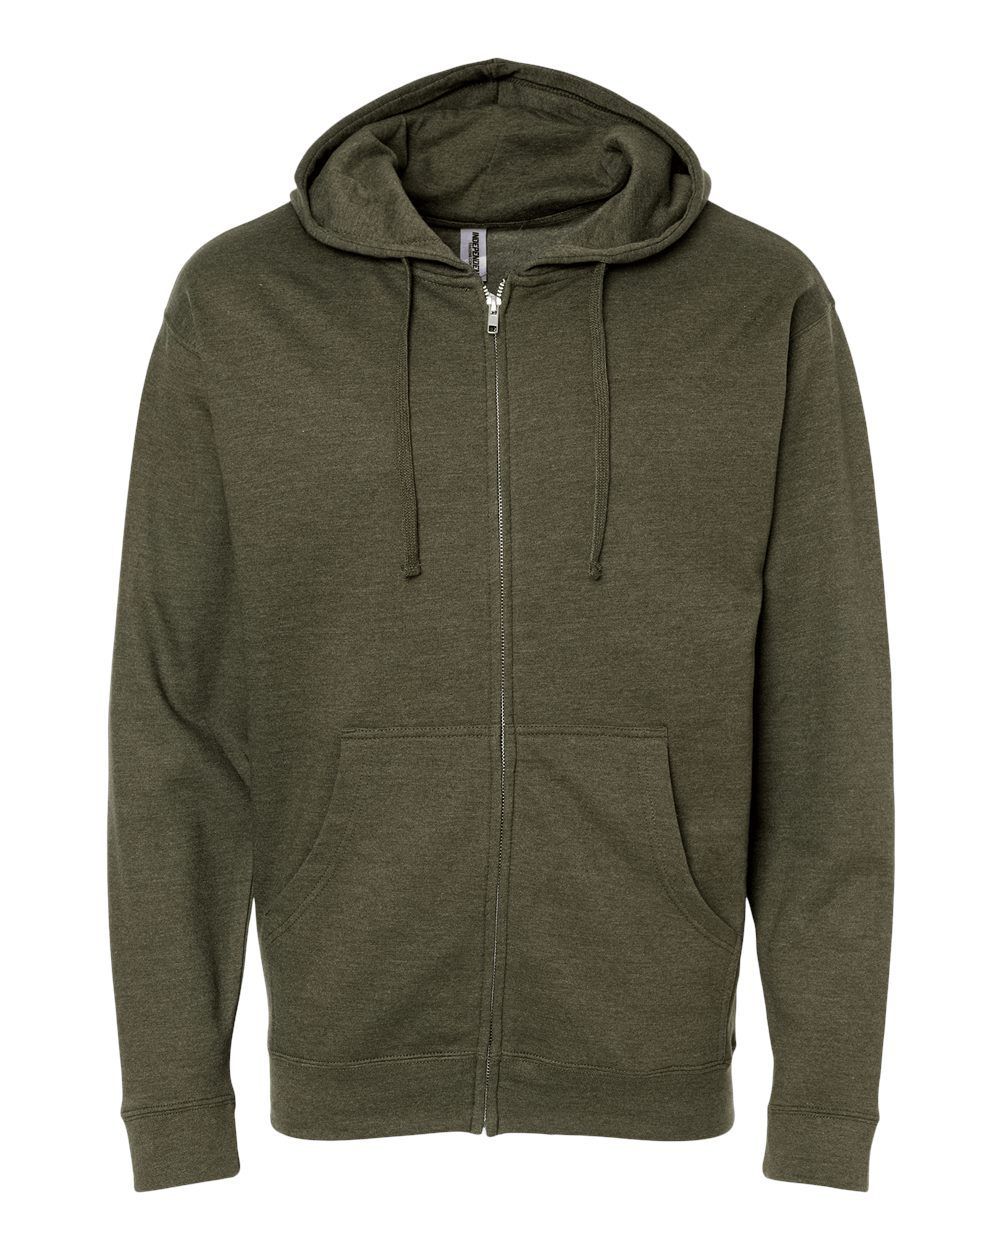 Custom Zip Up Hoodies & Sweatshirts | Coastal Reign